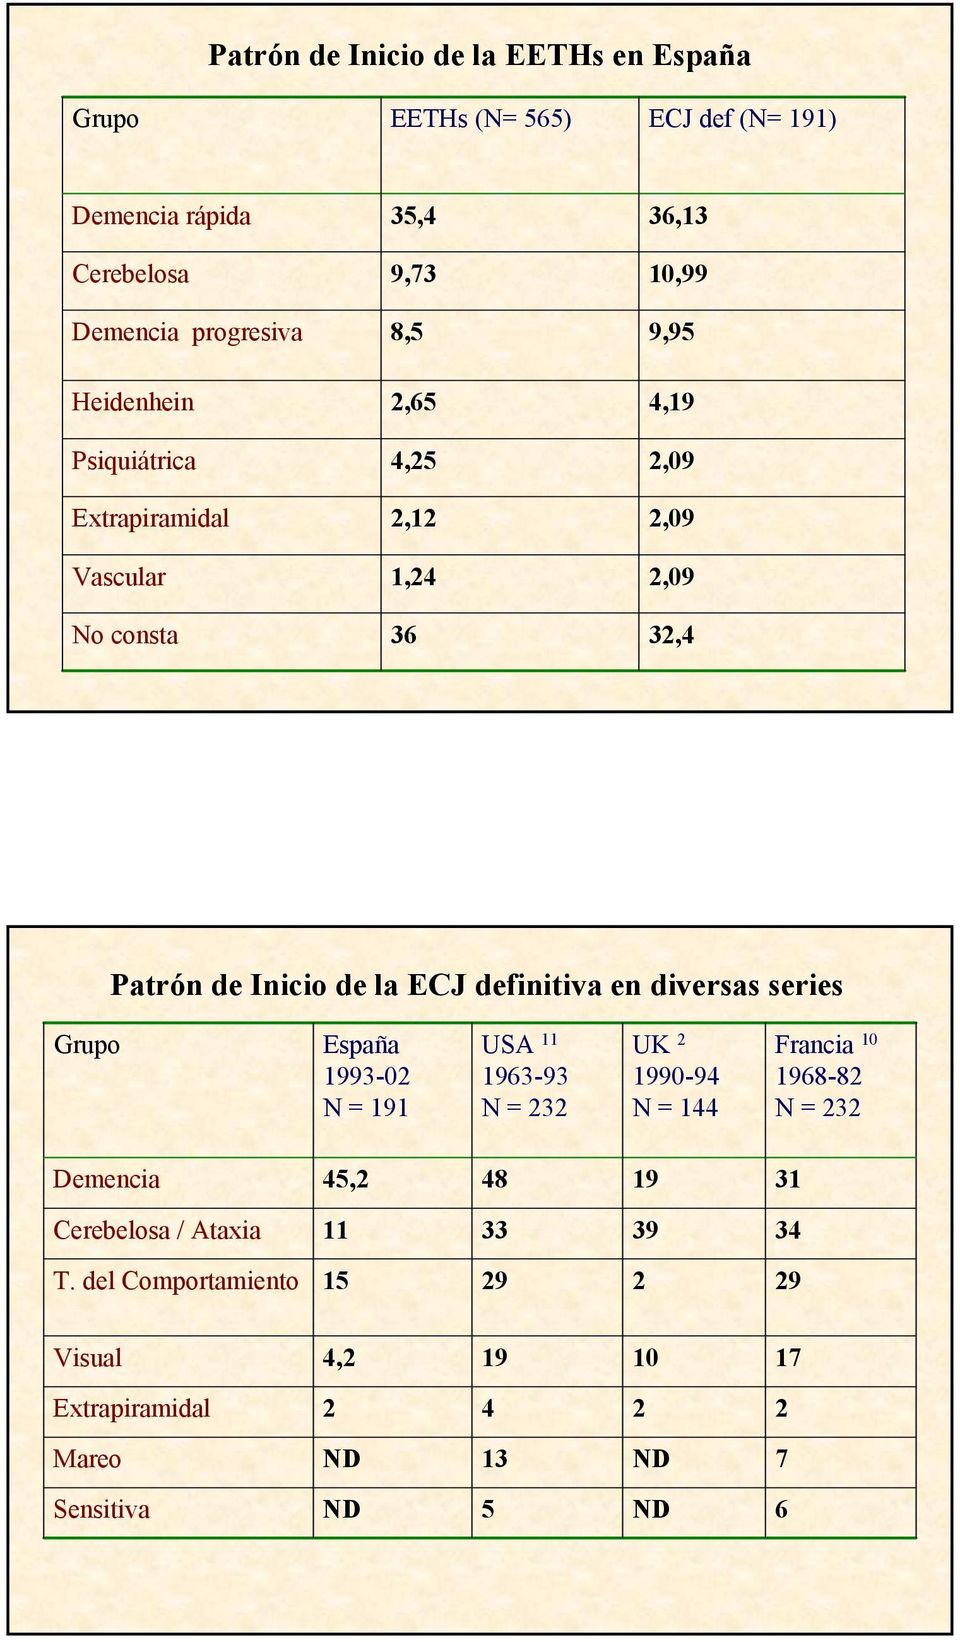 la ECJ definitiva en diversas series Grupo España 1993-02 N = 191 USA 11 1963-93 N = 232 UK 2 1990-94 N = 144 Francia 10 1968-82 N = 232 Demencia